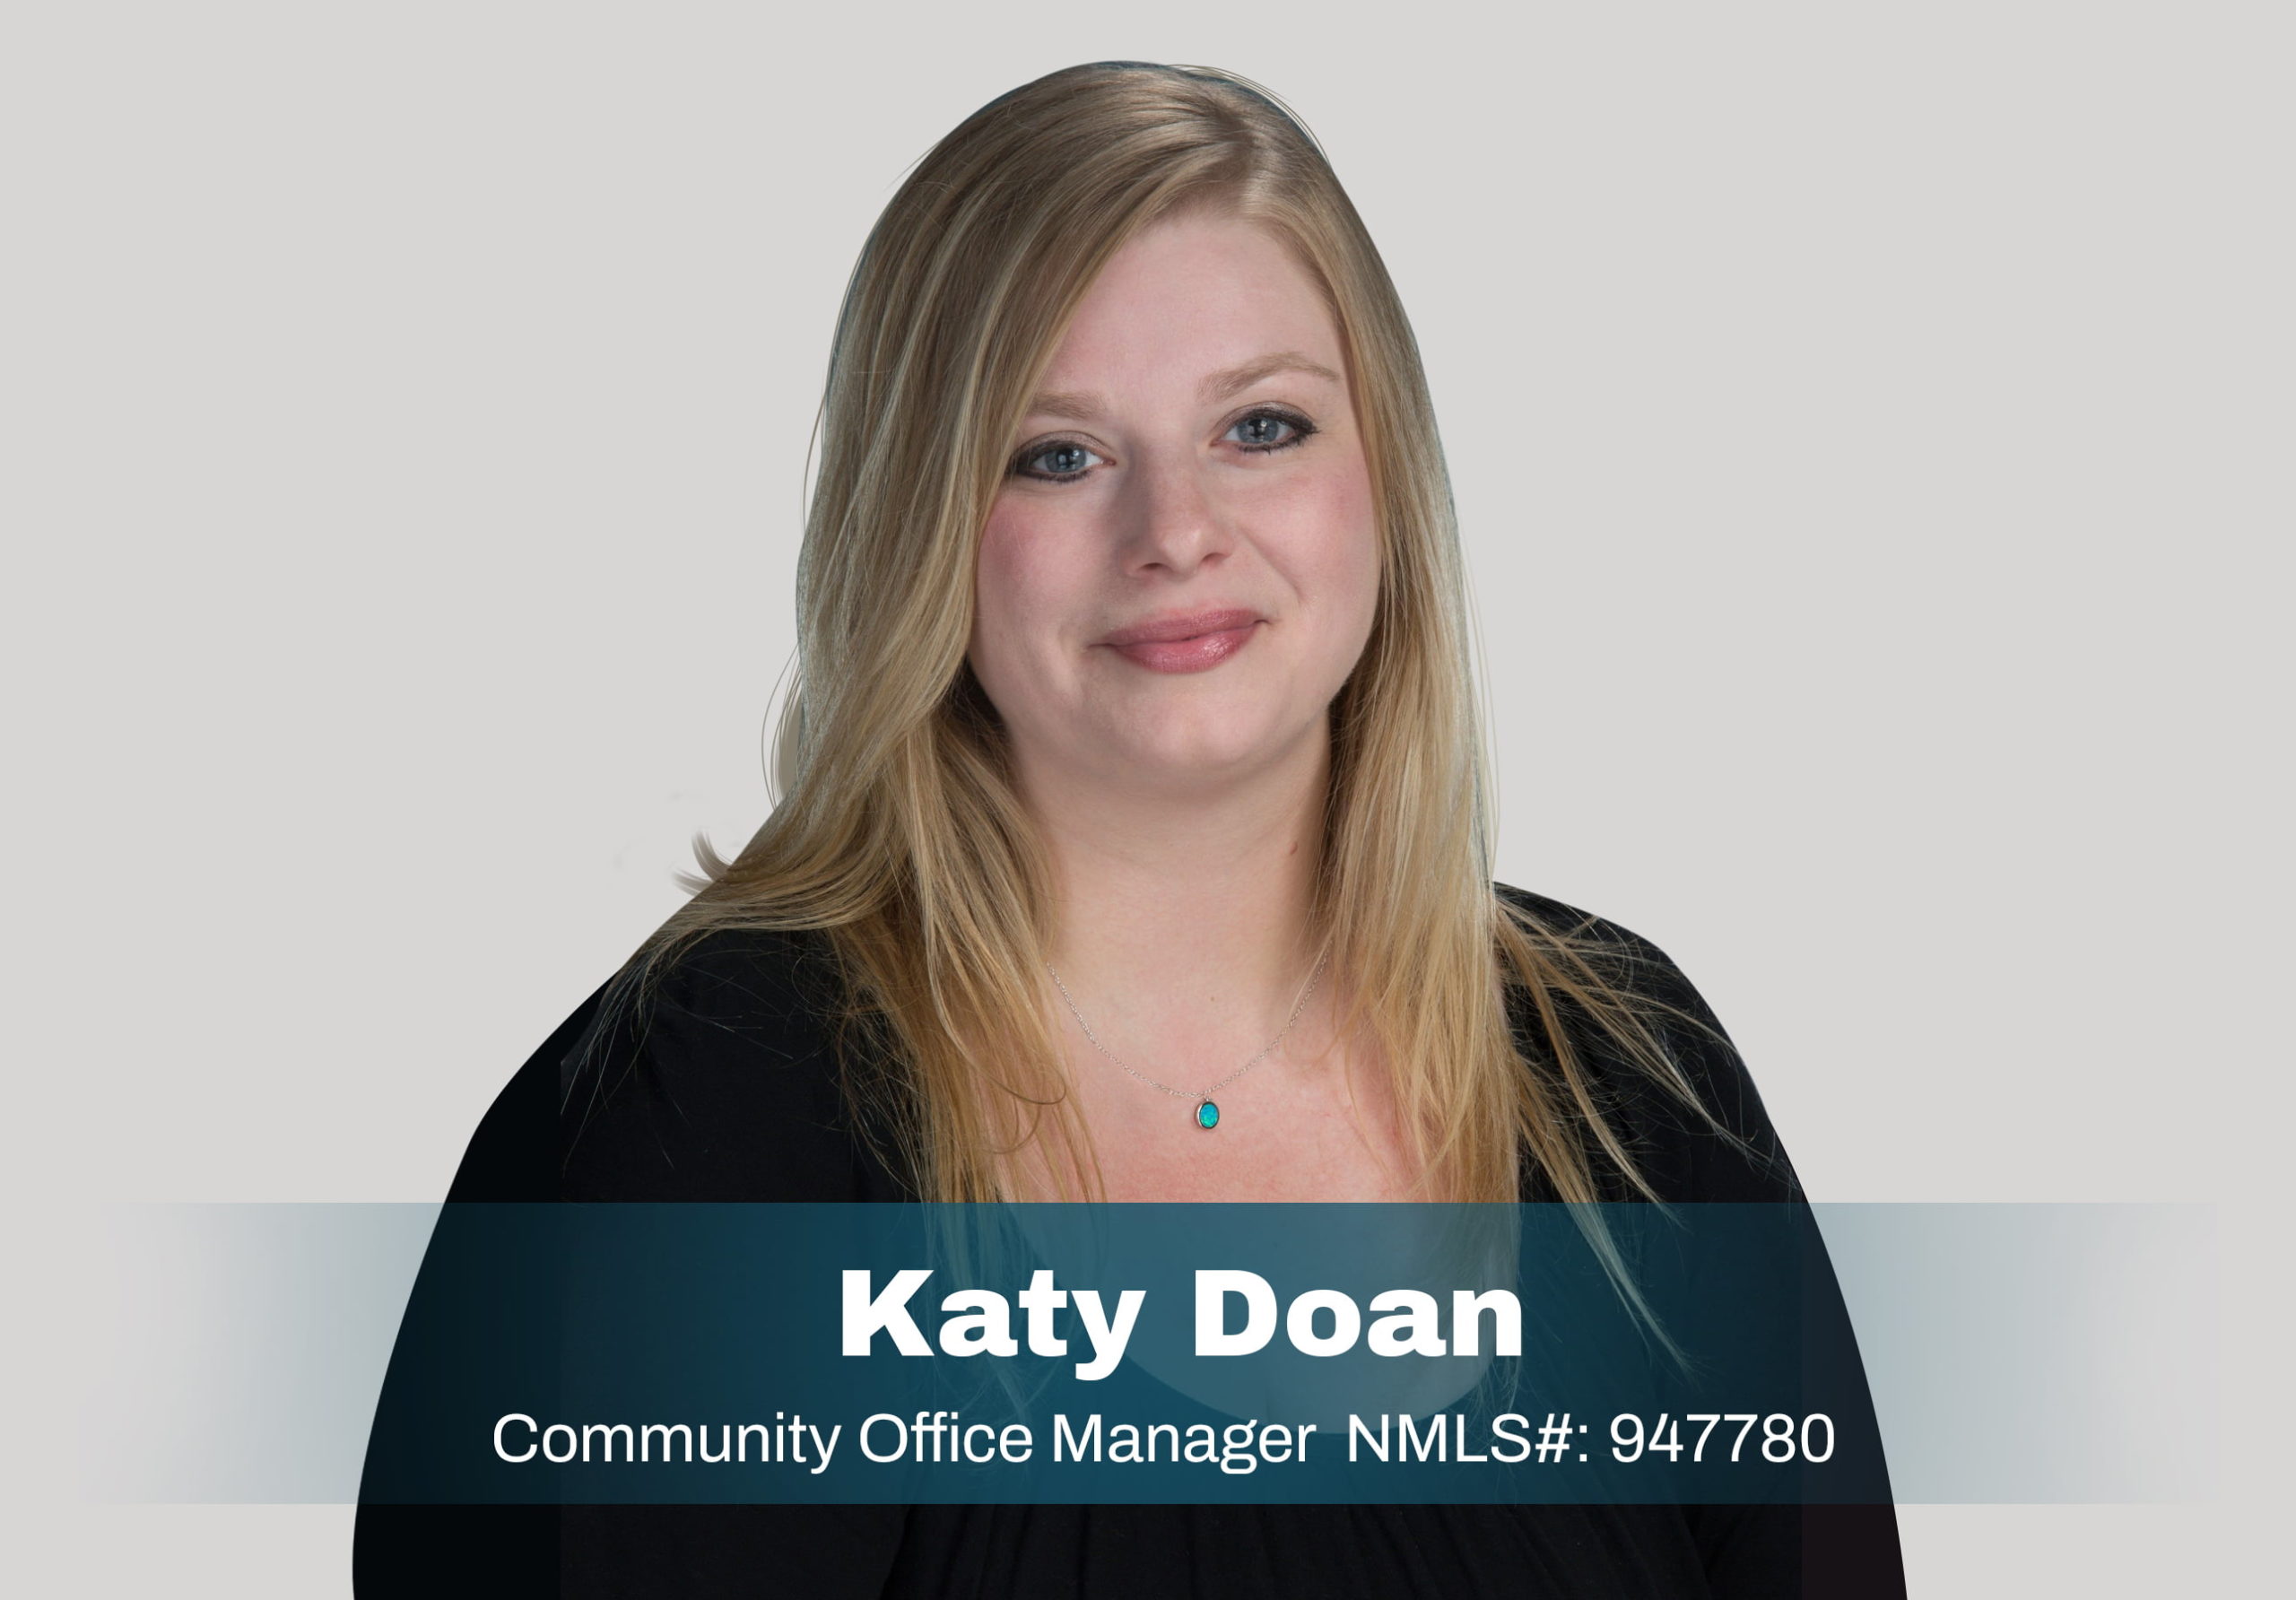 Katy Doan - Community Office Manager - NMLS # 947780